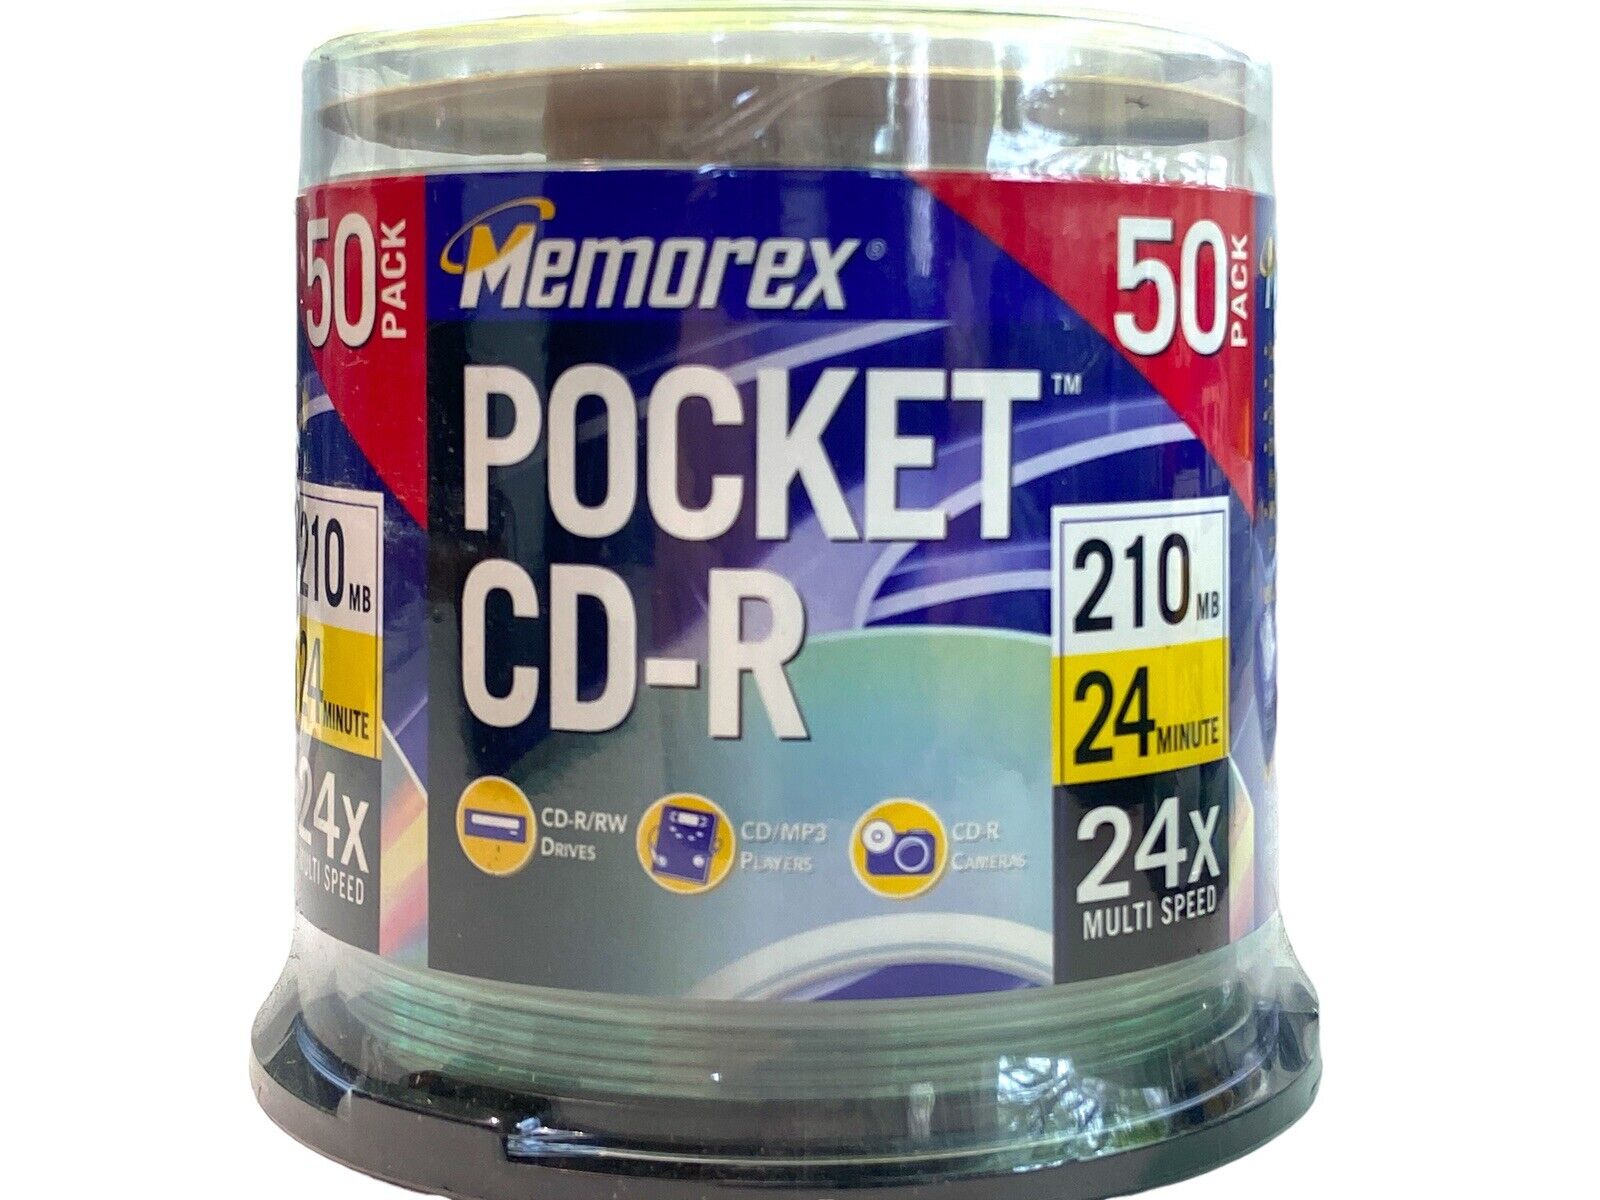 MEMOREX 50 Pack POCKET CD-R 210MB 24 Minute 24X Speed New